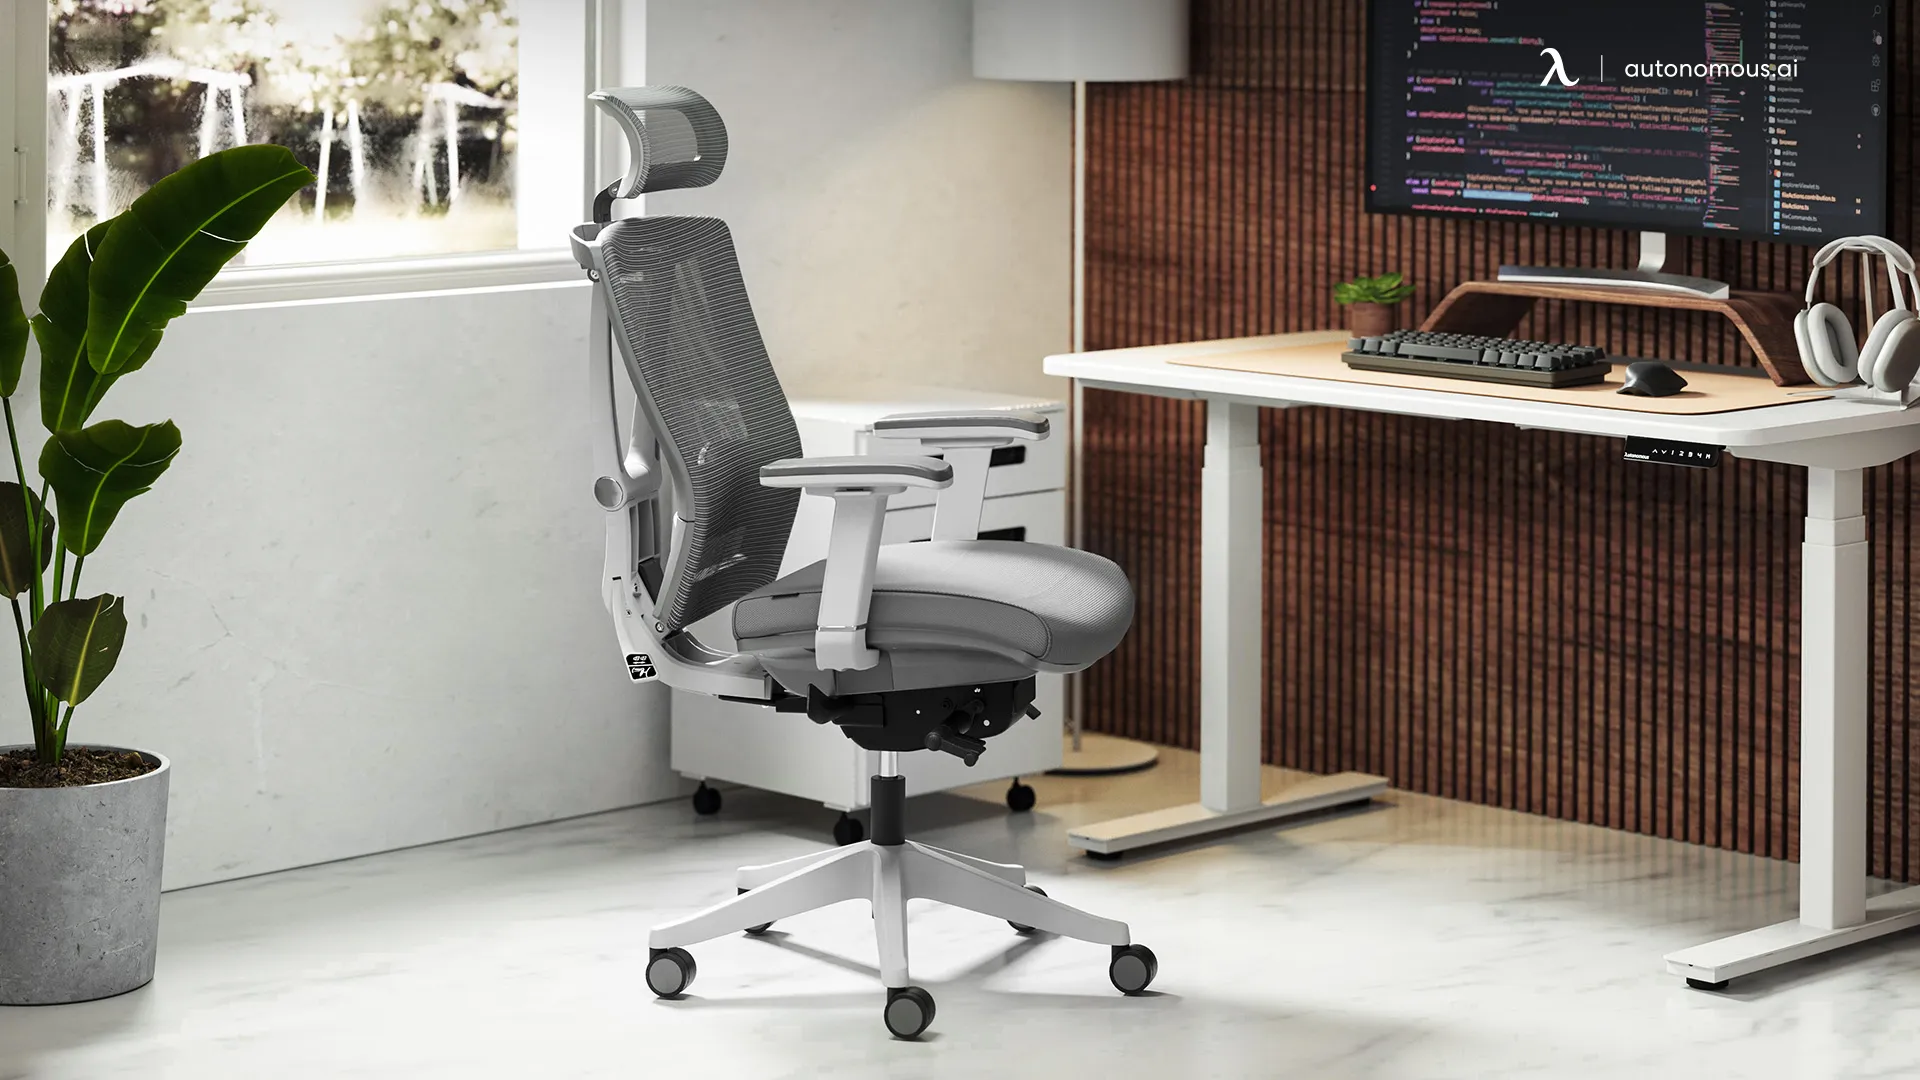 Can I purchase Autonomous ergonomic office furniture in bulk?